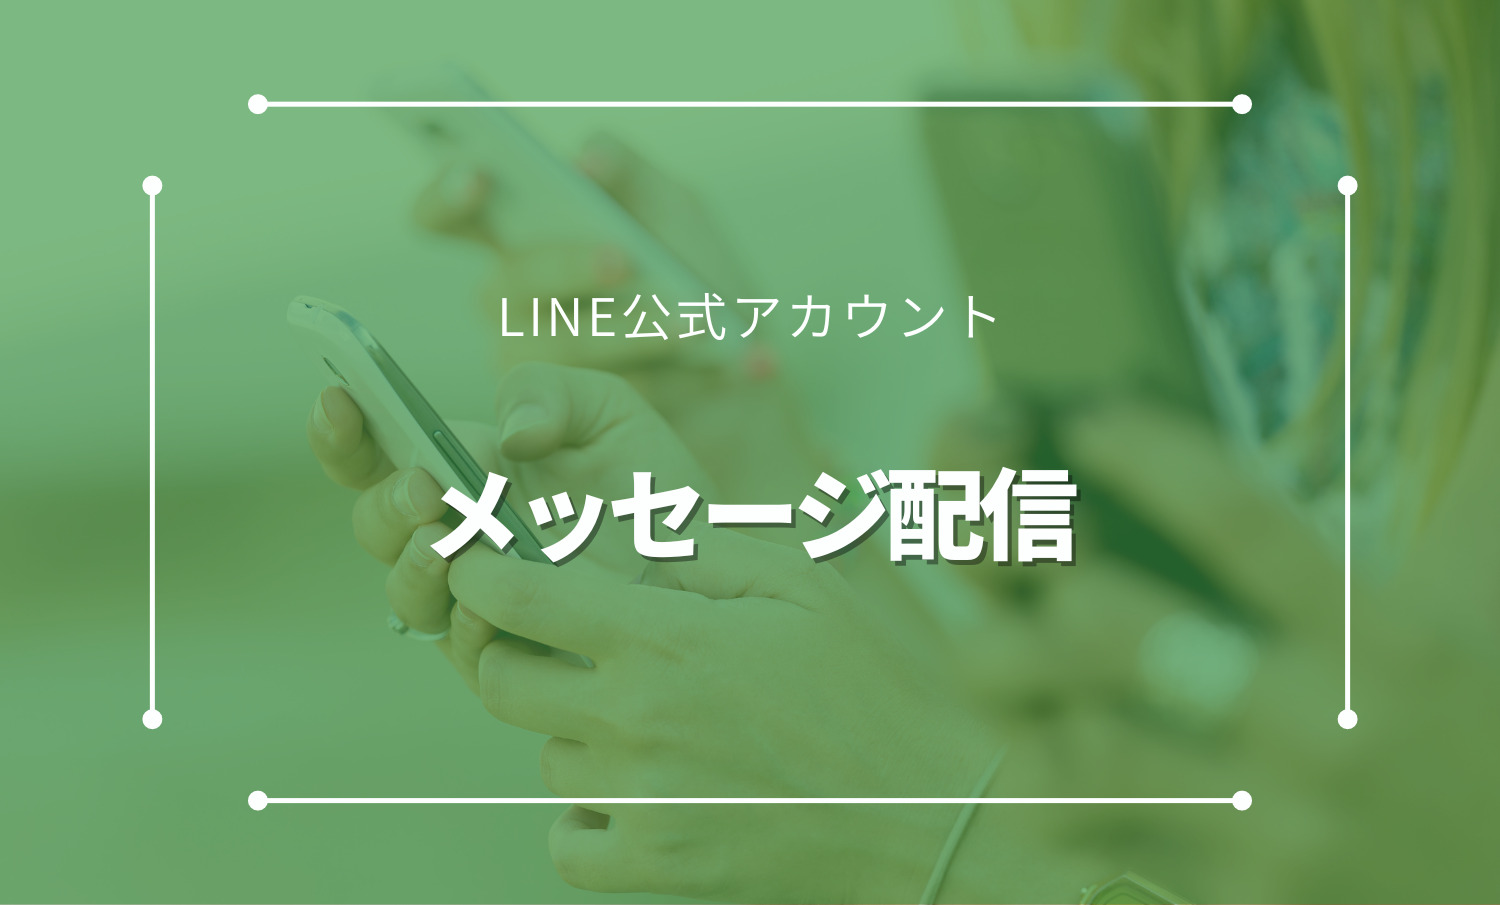 LINE公式アカウントのメッセージ配信について解説。配信方法の種類やポイントなどをご紹介。